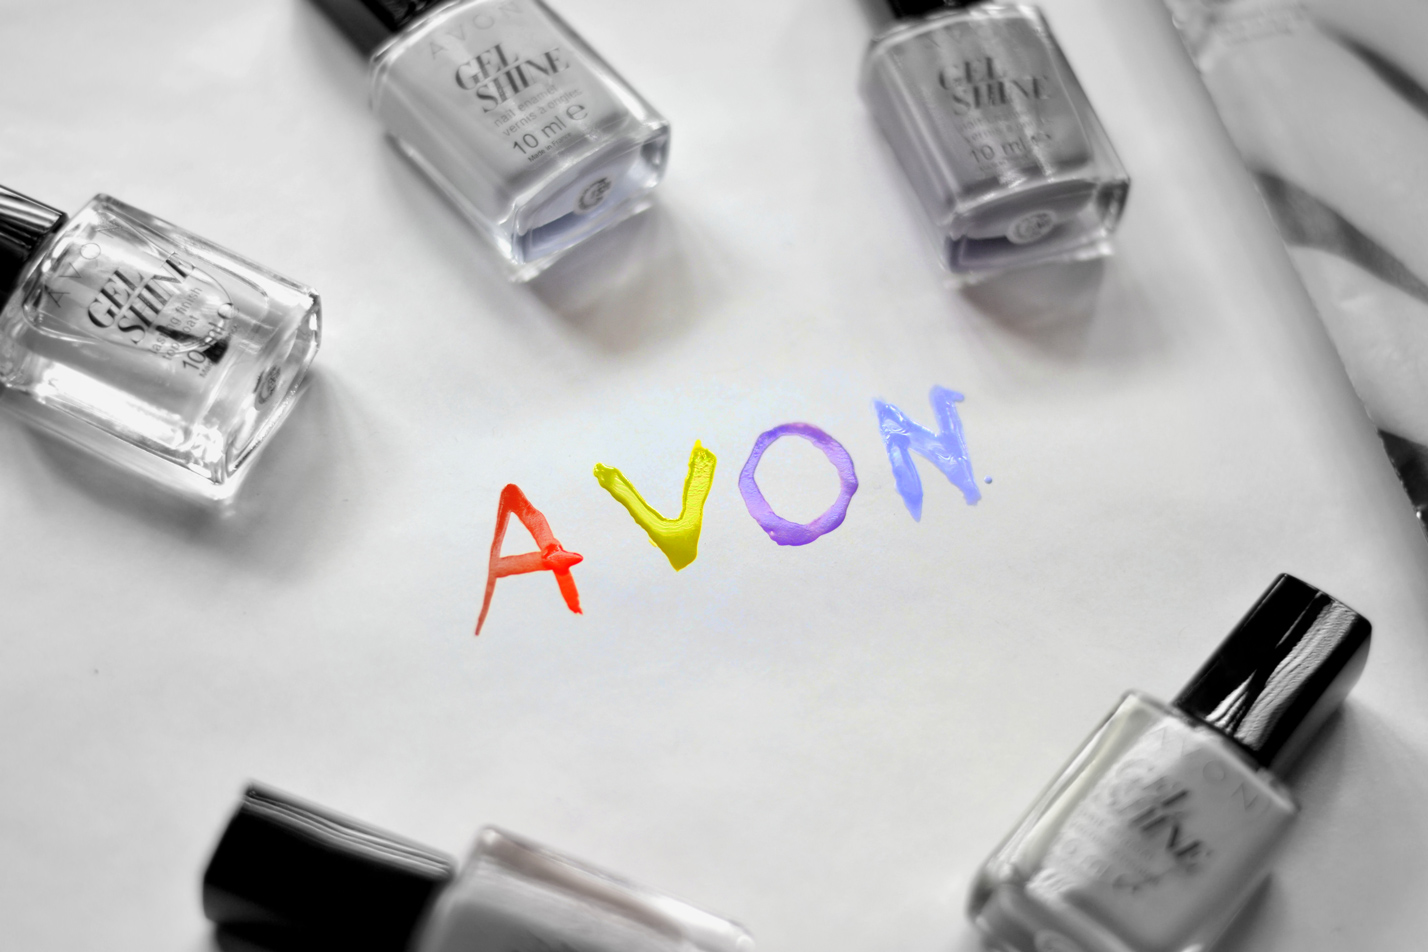 Avon-gel-shine-campaign.-jpg